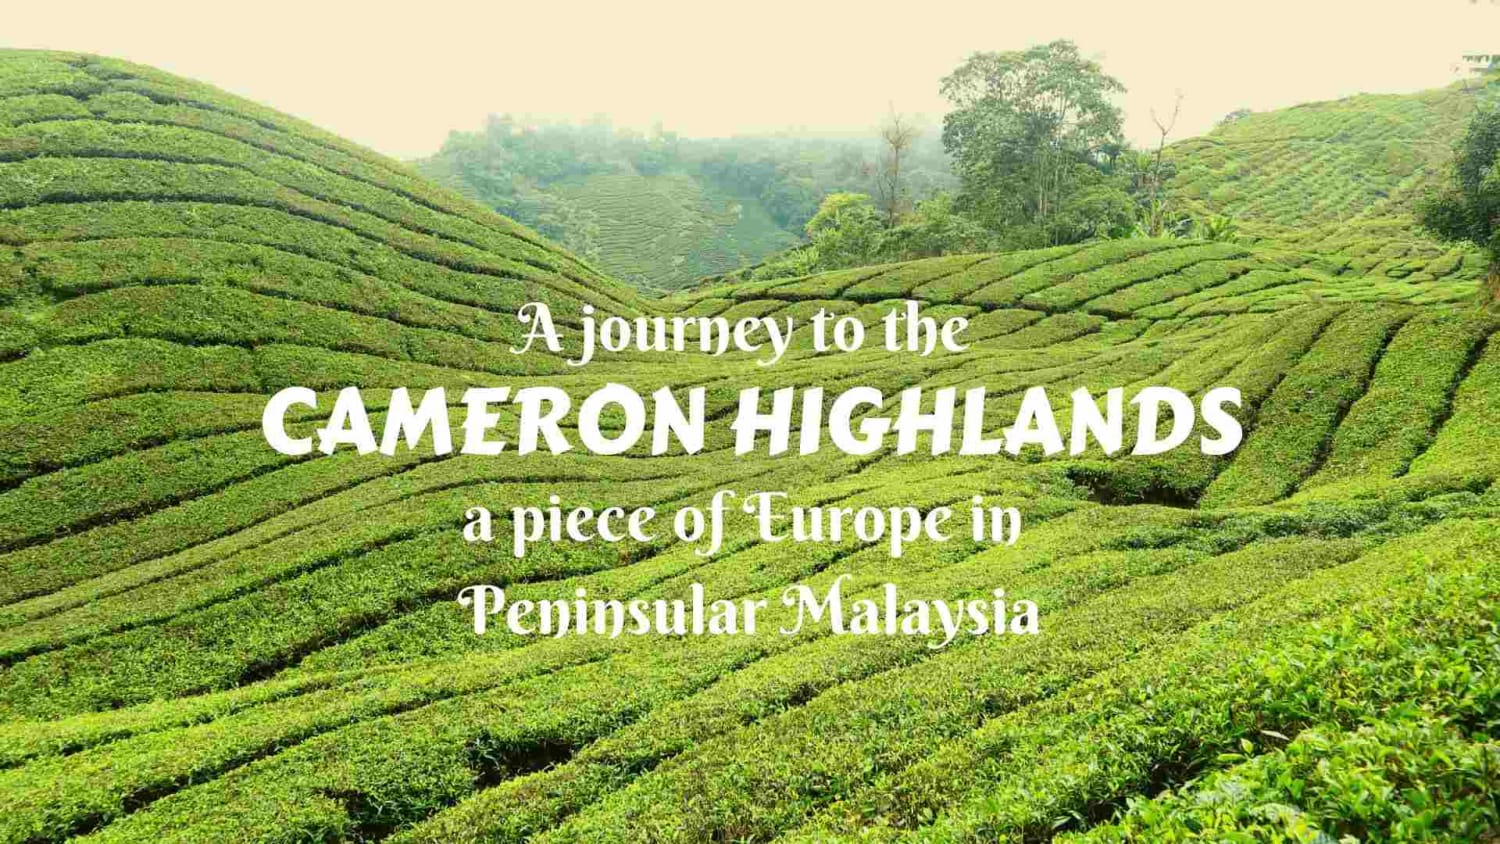 A journey to the Cameron Highlands, Peninsular Malaysia